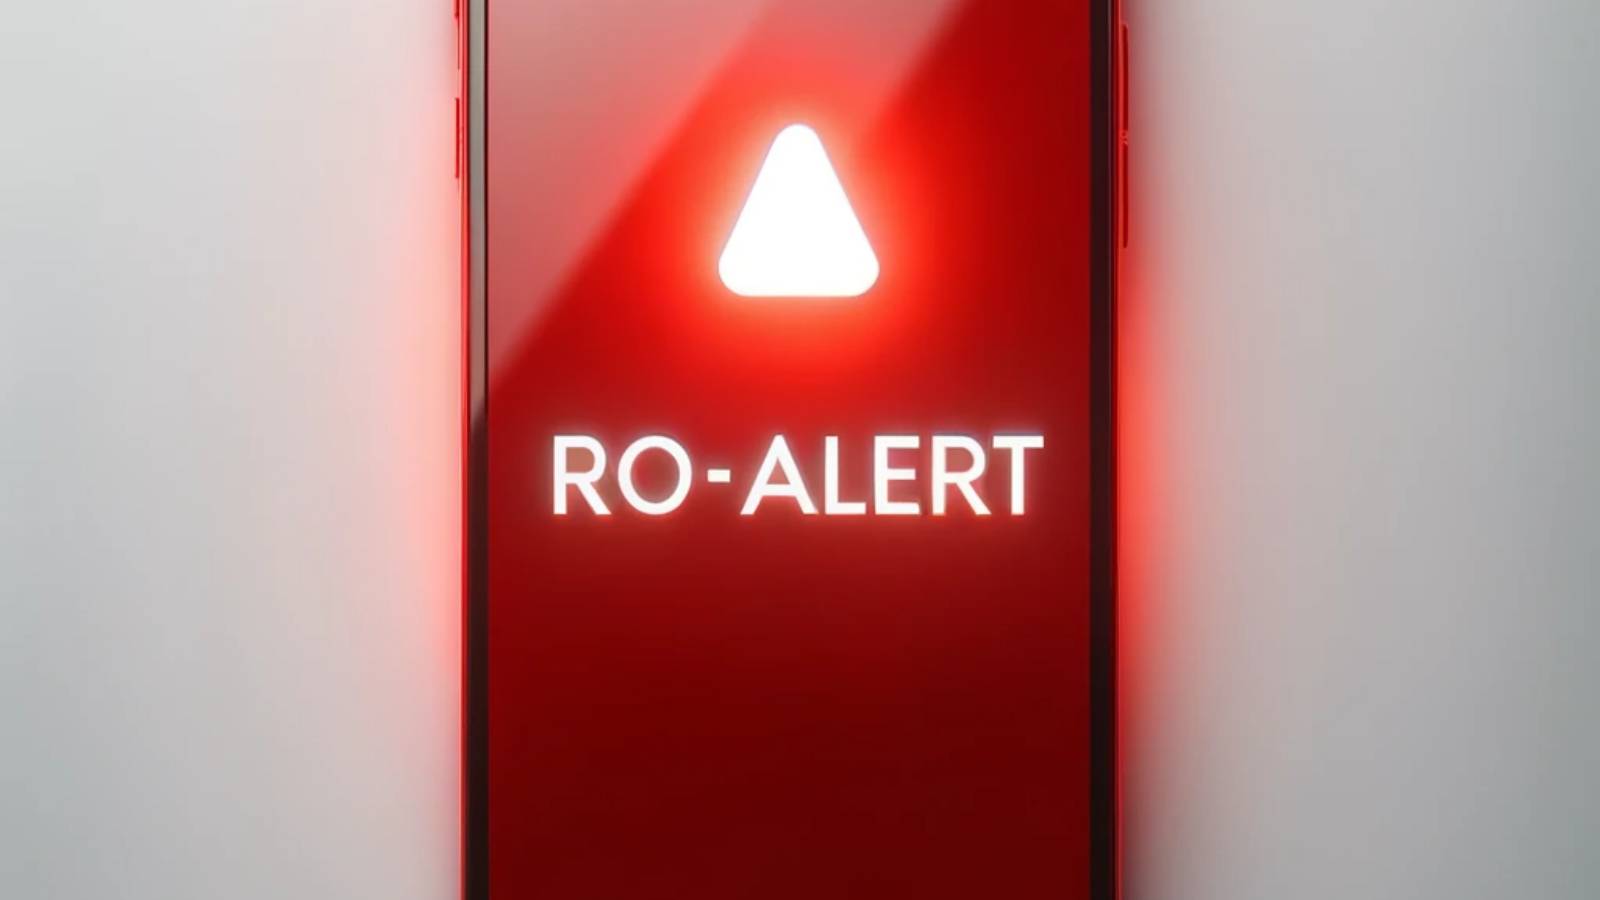 alert ro-alert emergency tulcea drone rusland